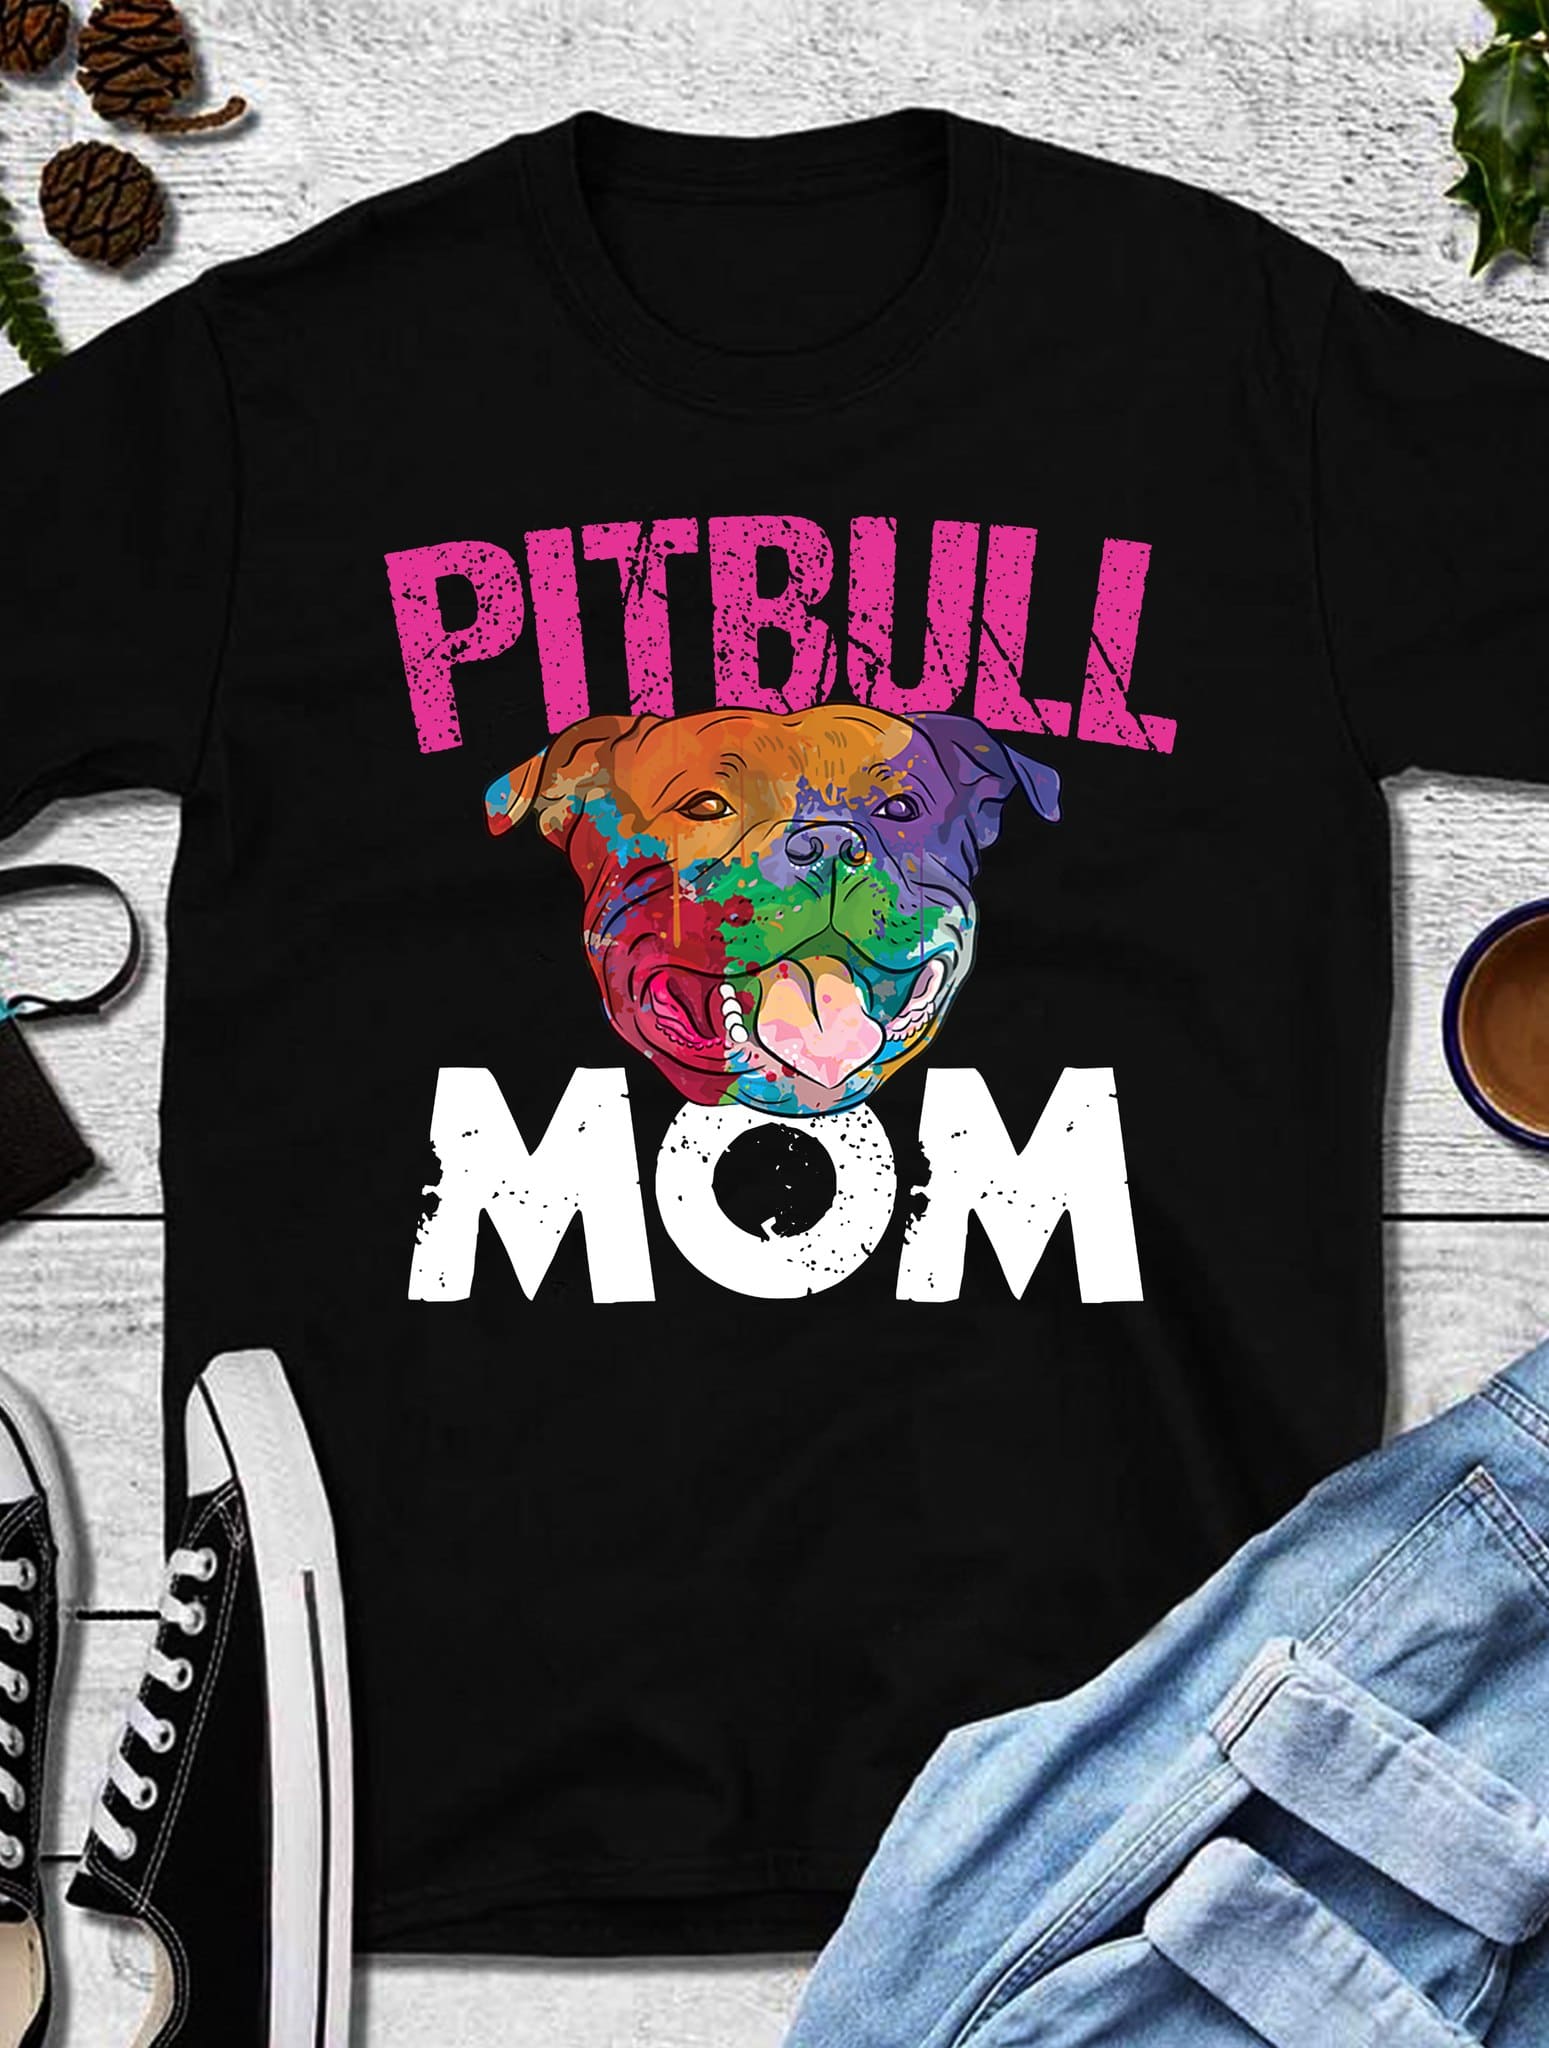 Pitbull Graphic T-shirt Gift for mother - Pitbull Mom